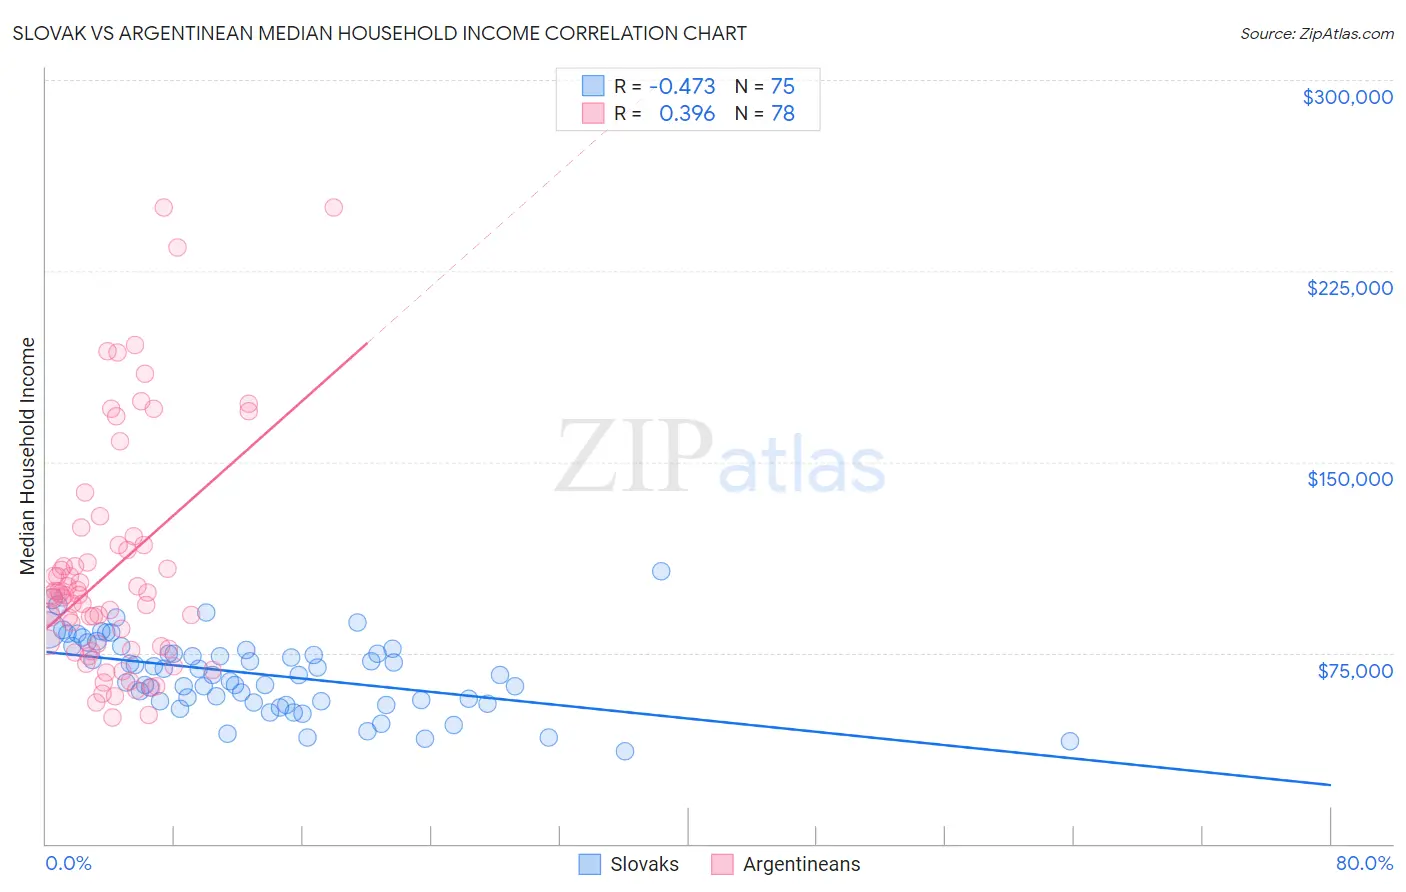 Slovak vs Argentinean Median Household Income